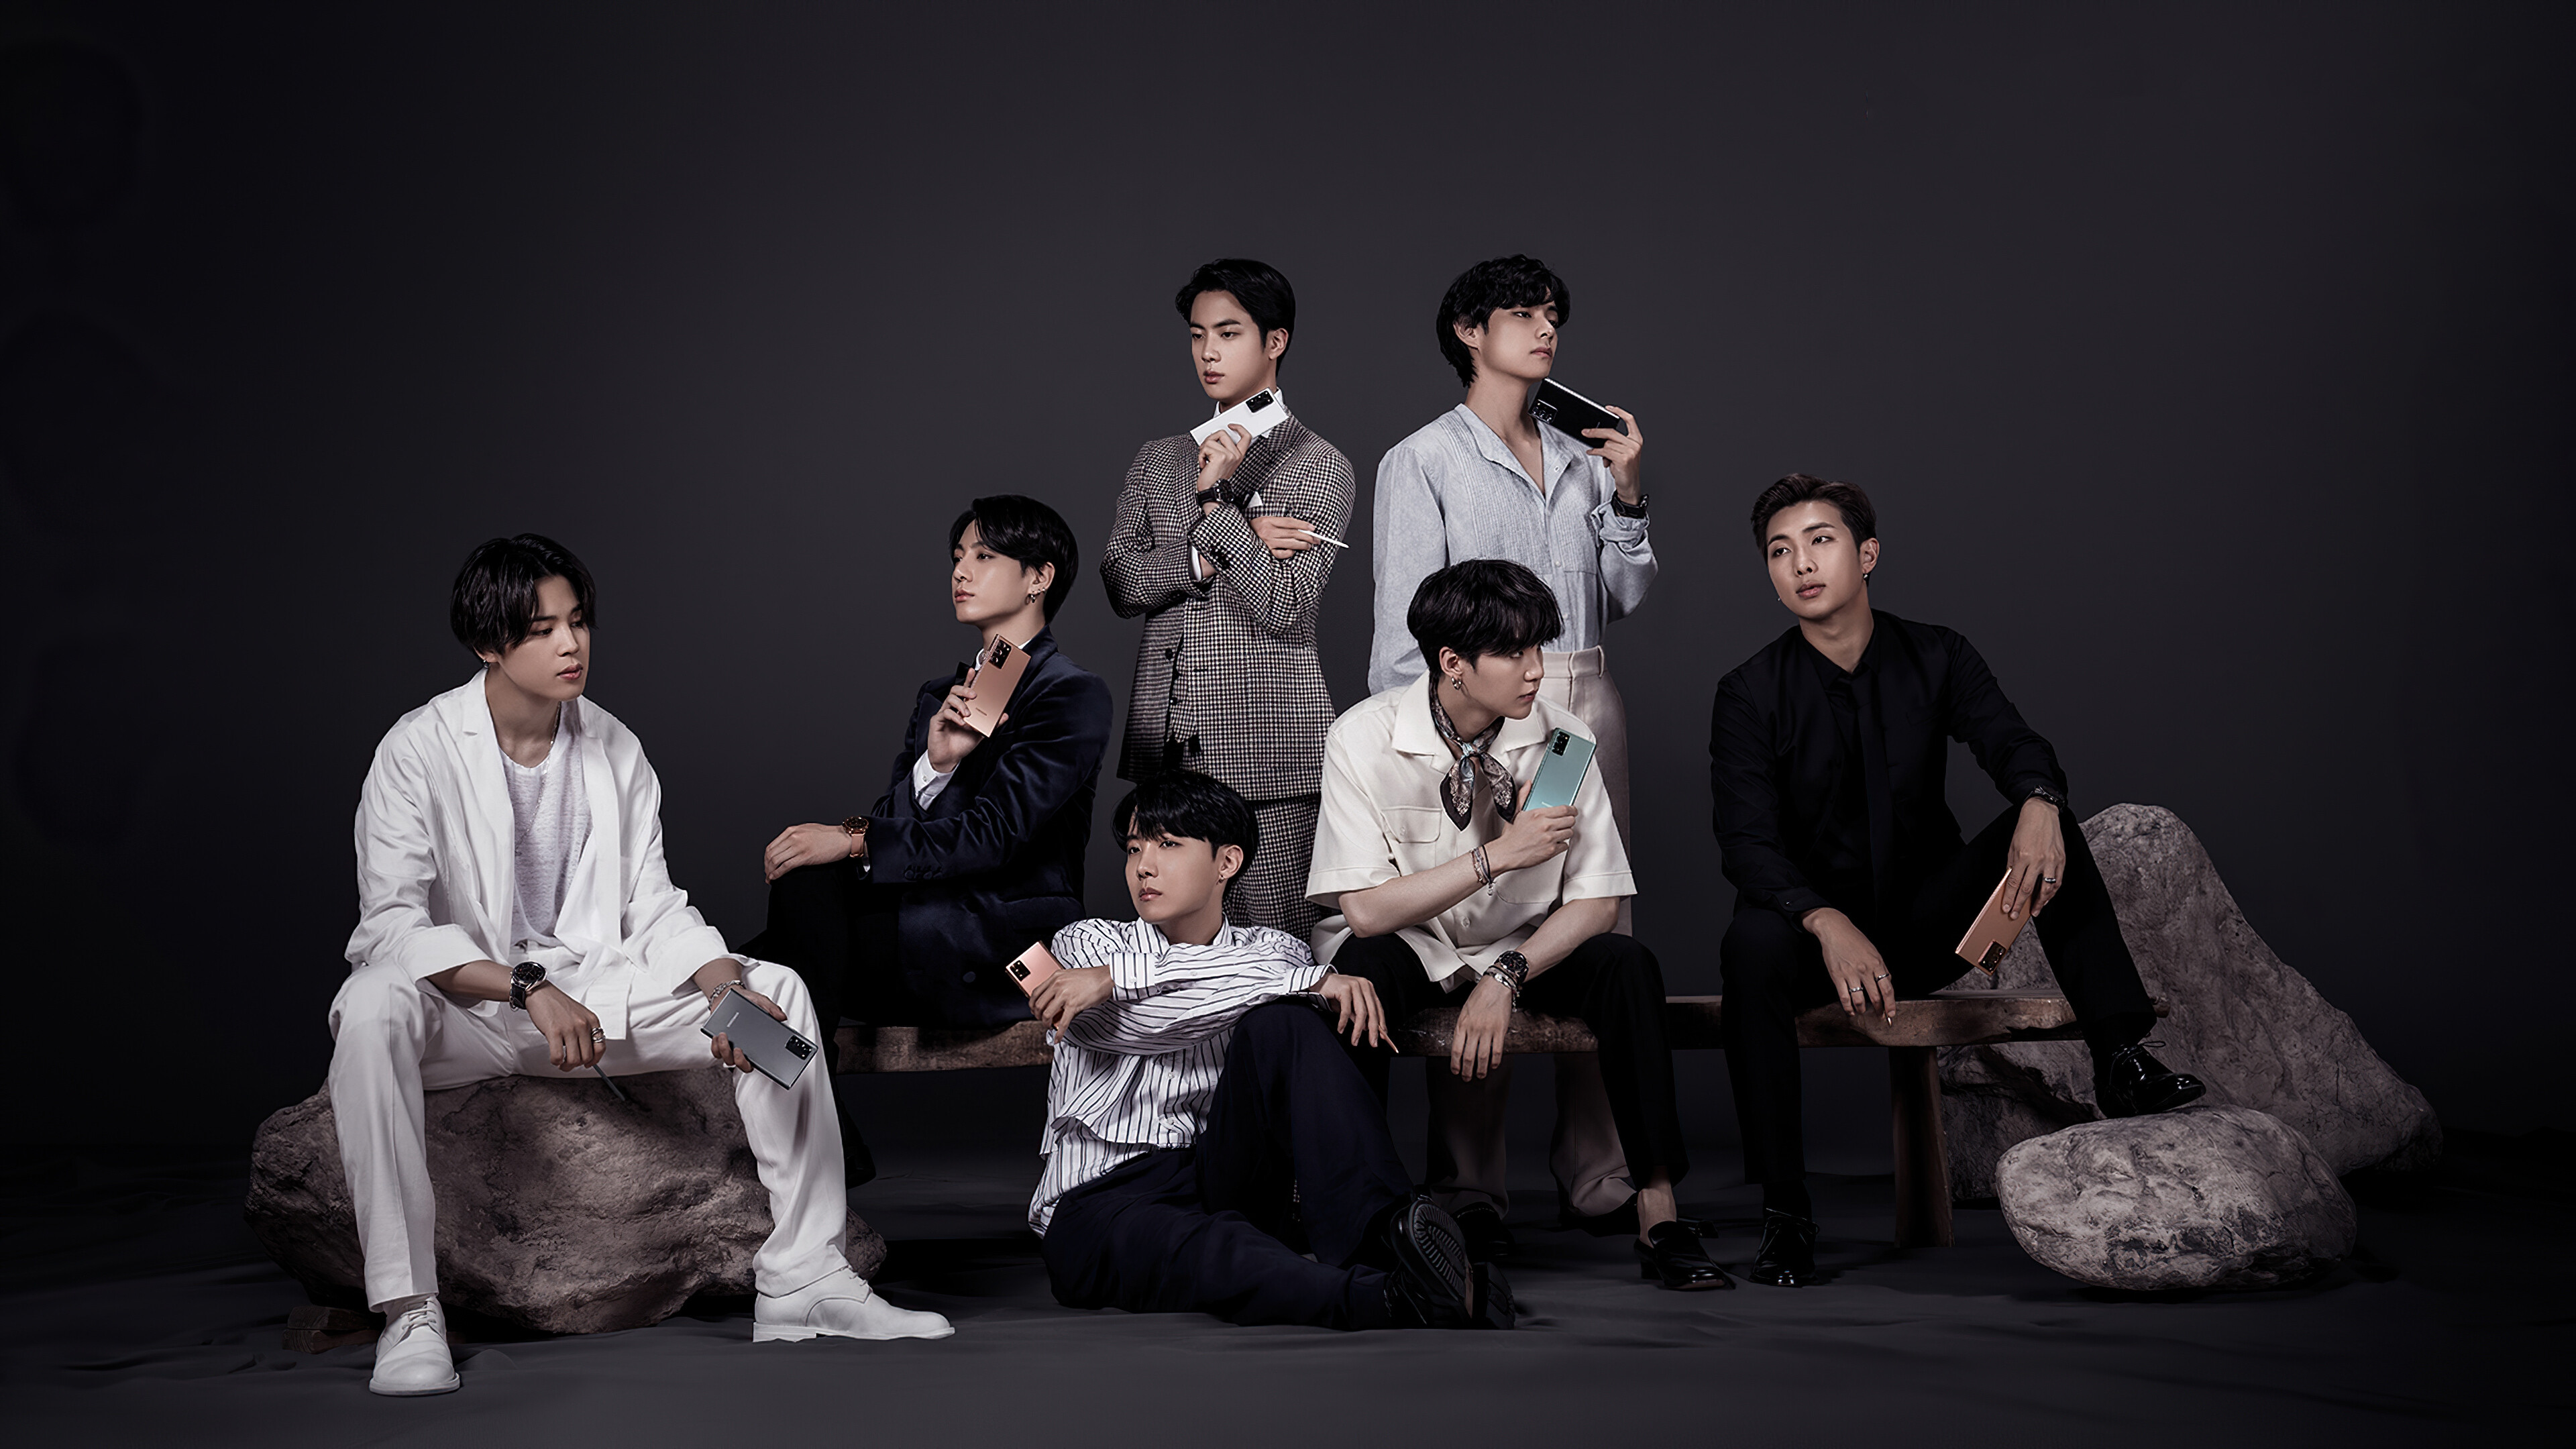 Jungkook: A member of BTS, Bangtan Boys, A South Korean boy band formed in 2010. 3840x2160 4K Wallpaper.